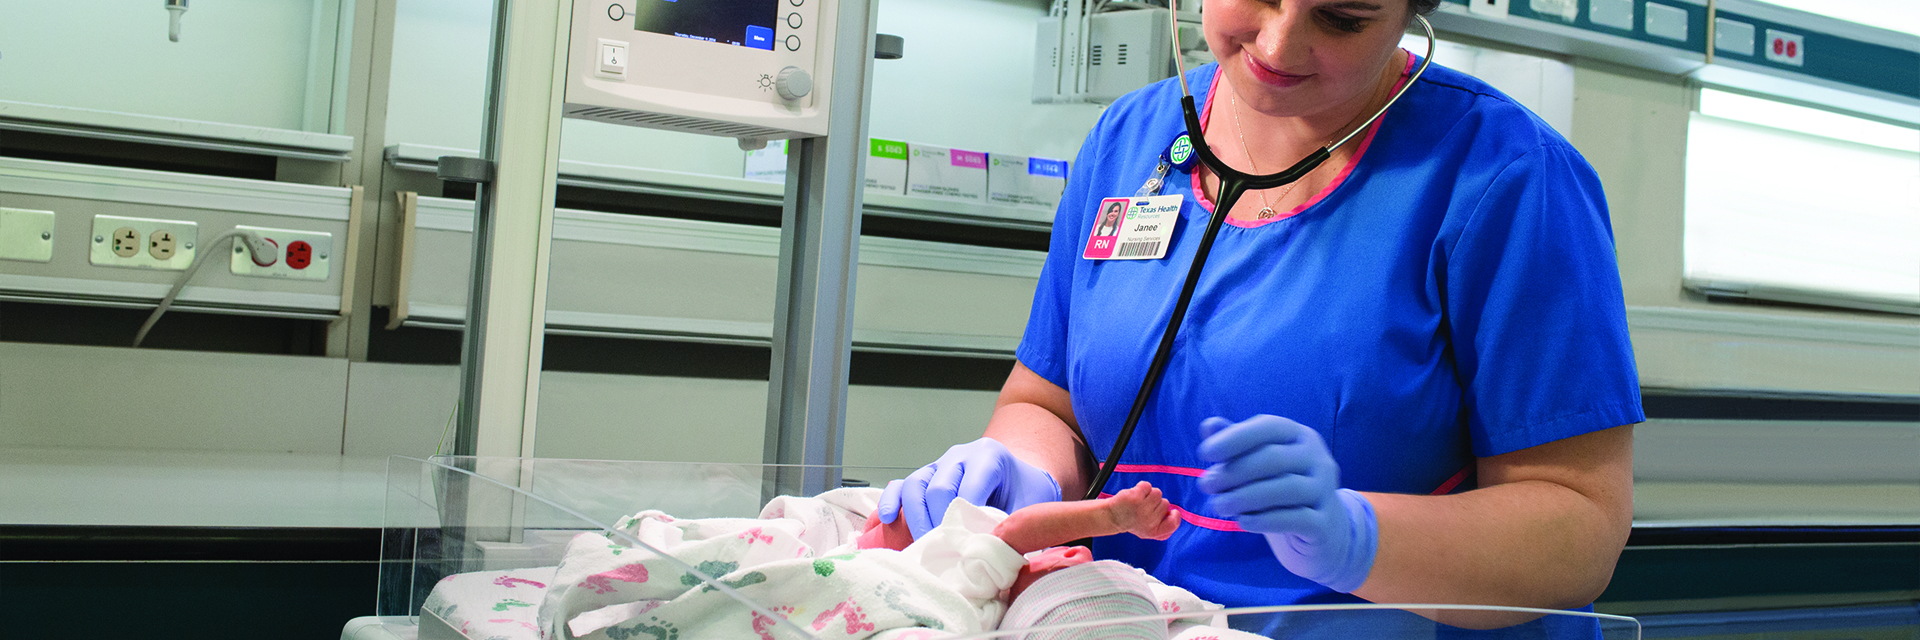 Nurse with newborn in hospital